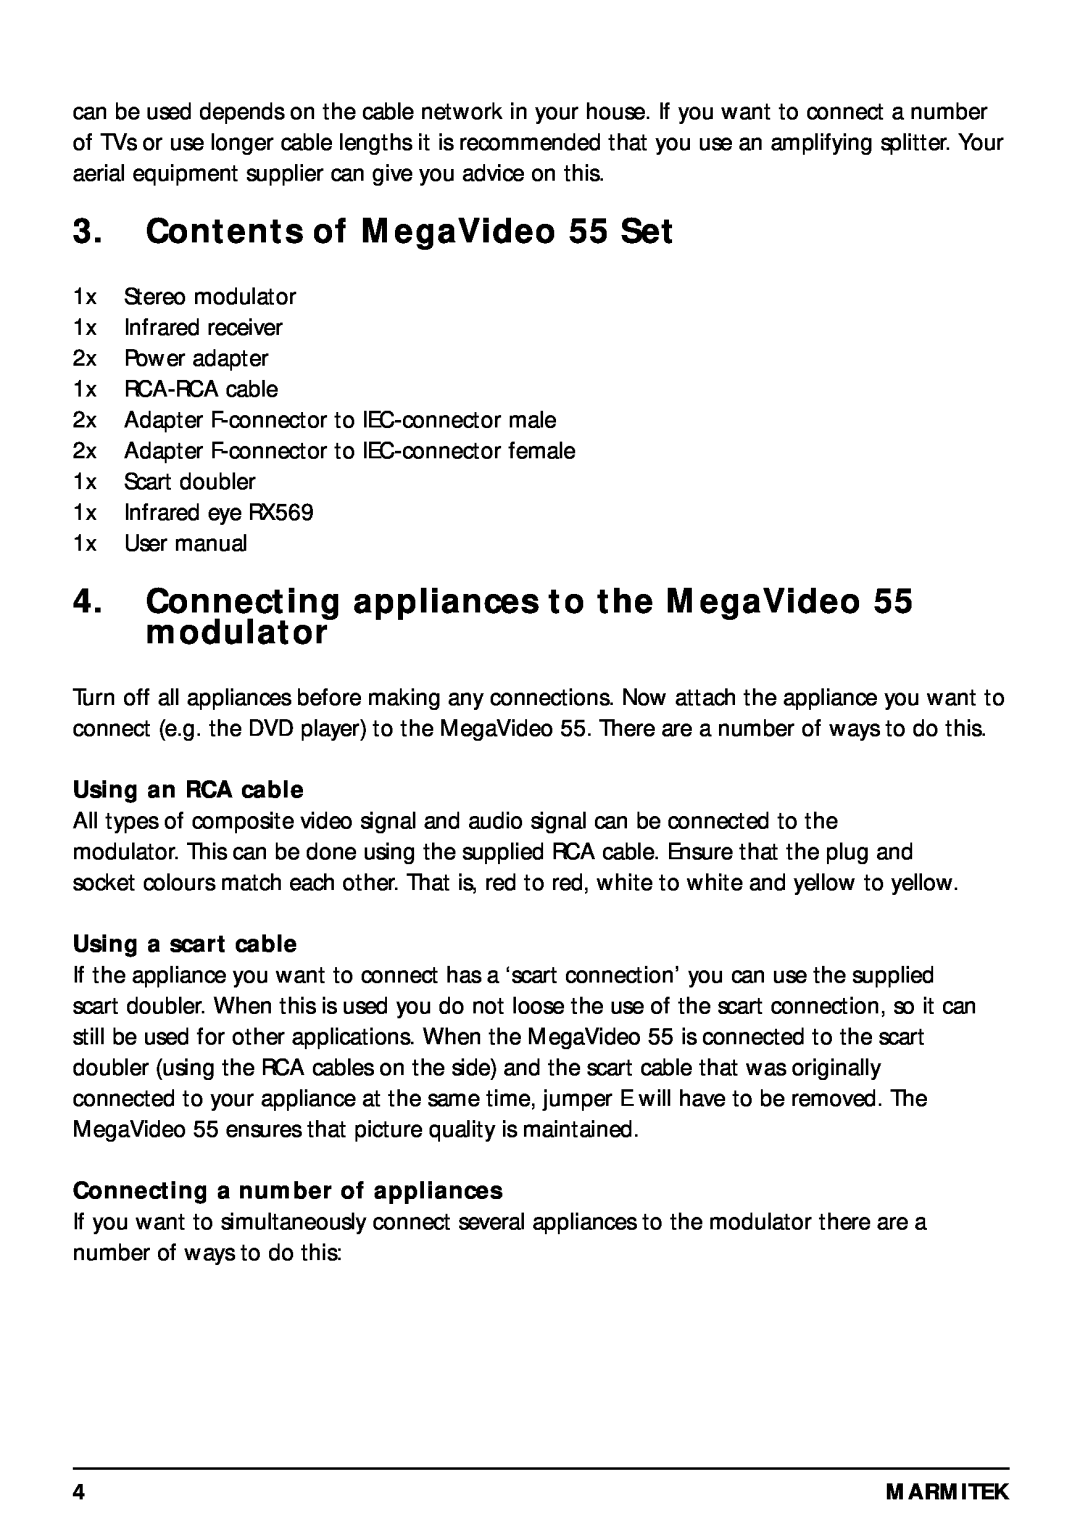 Marmitek 20068 / 300704 Contents of MegaVideo 55 Set, Connecting appliances to the MegaVideo 55 modulator 